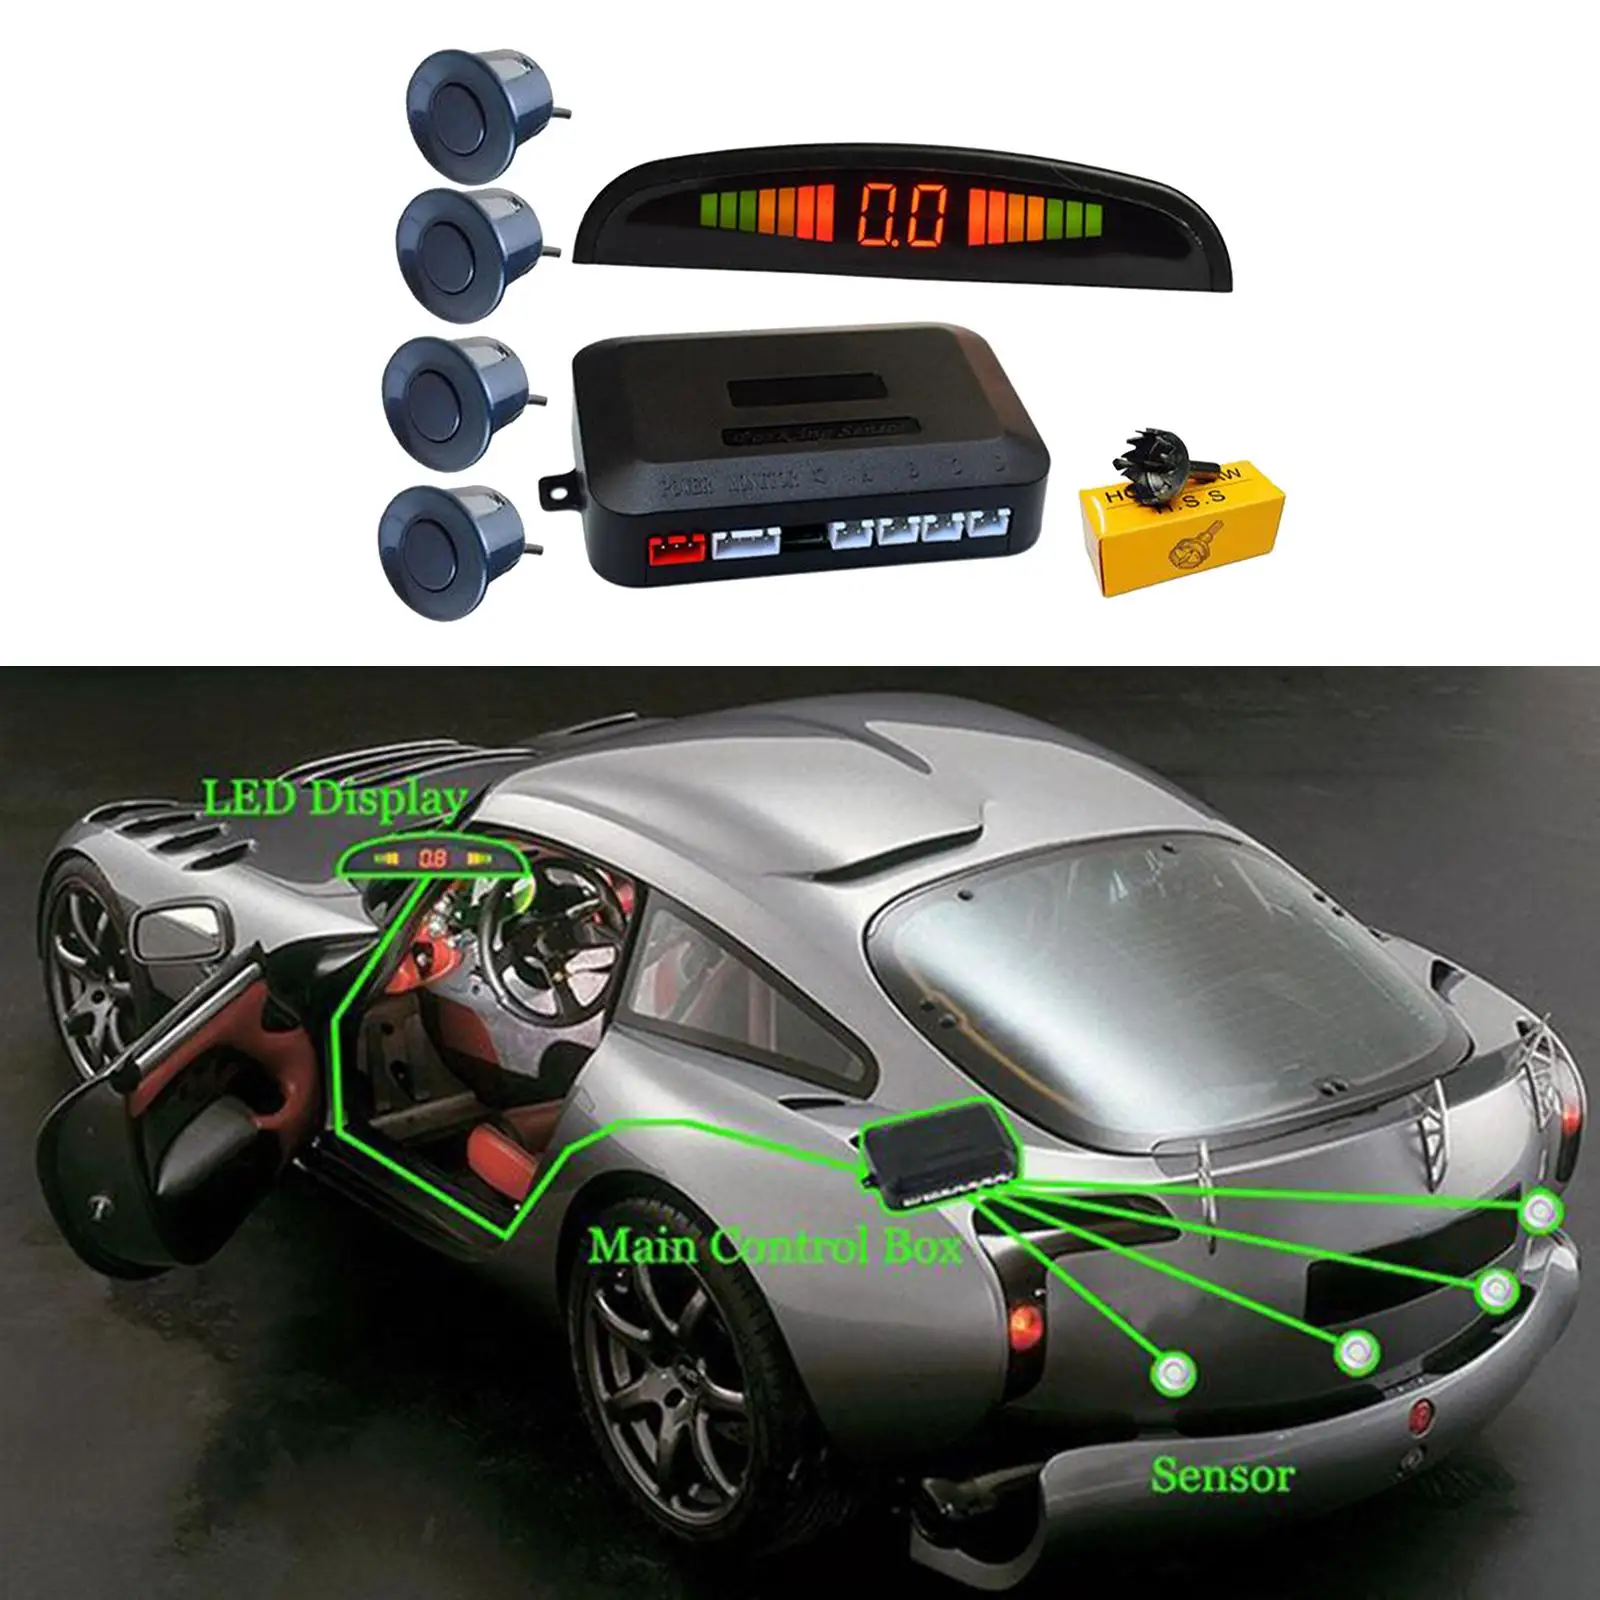 LED Display Parking Sensor, Car   System, LED Display + Buzzer  +   for  Vehicle